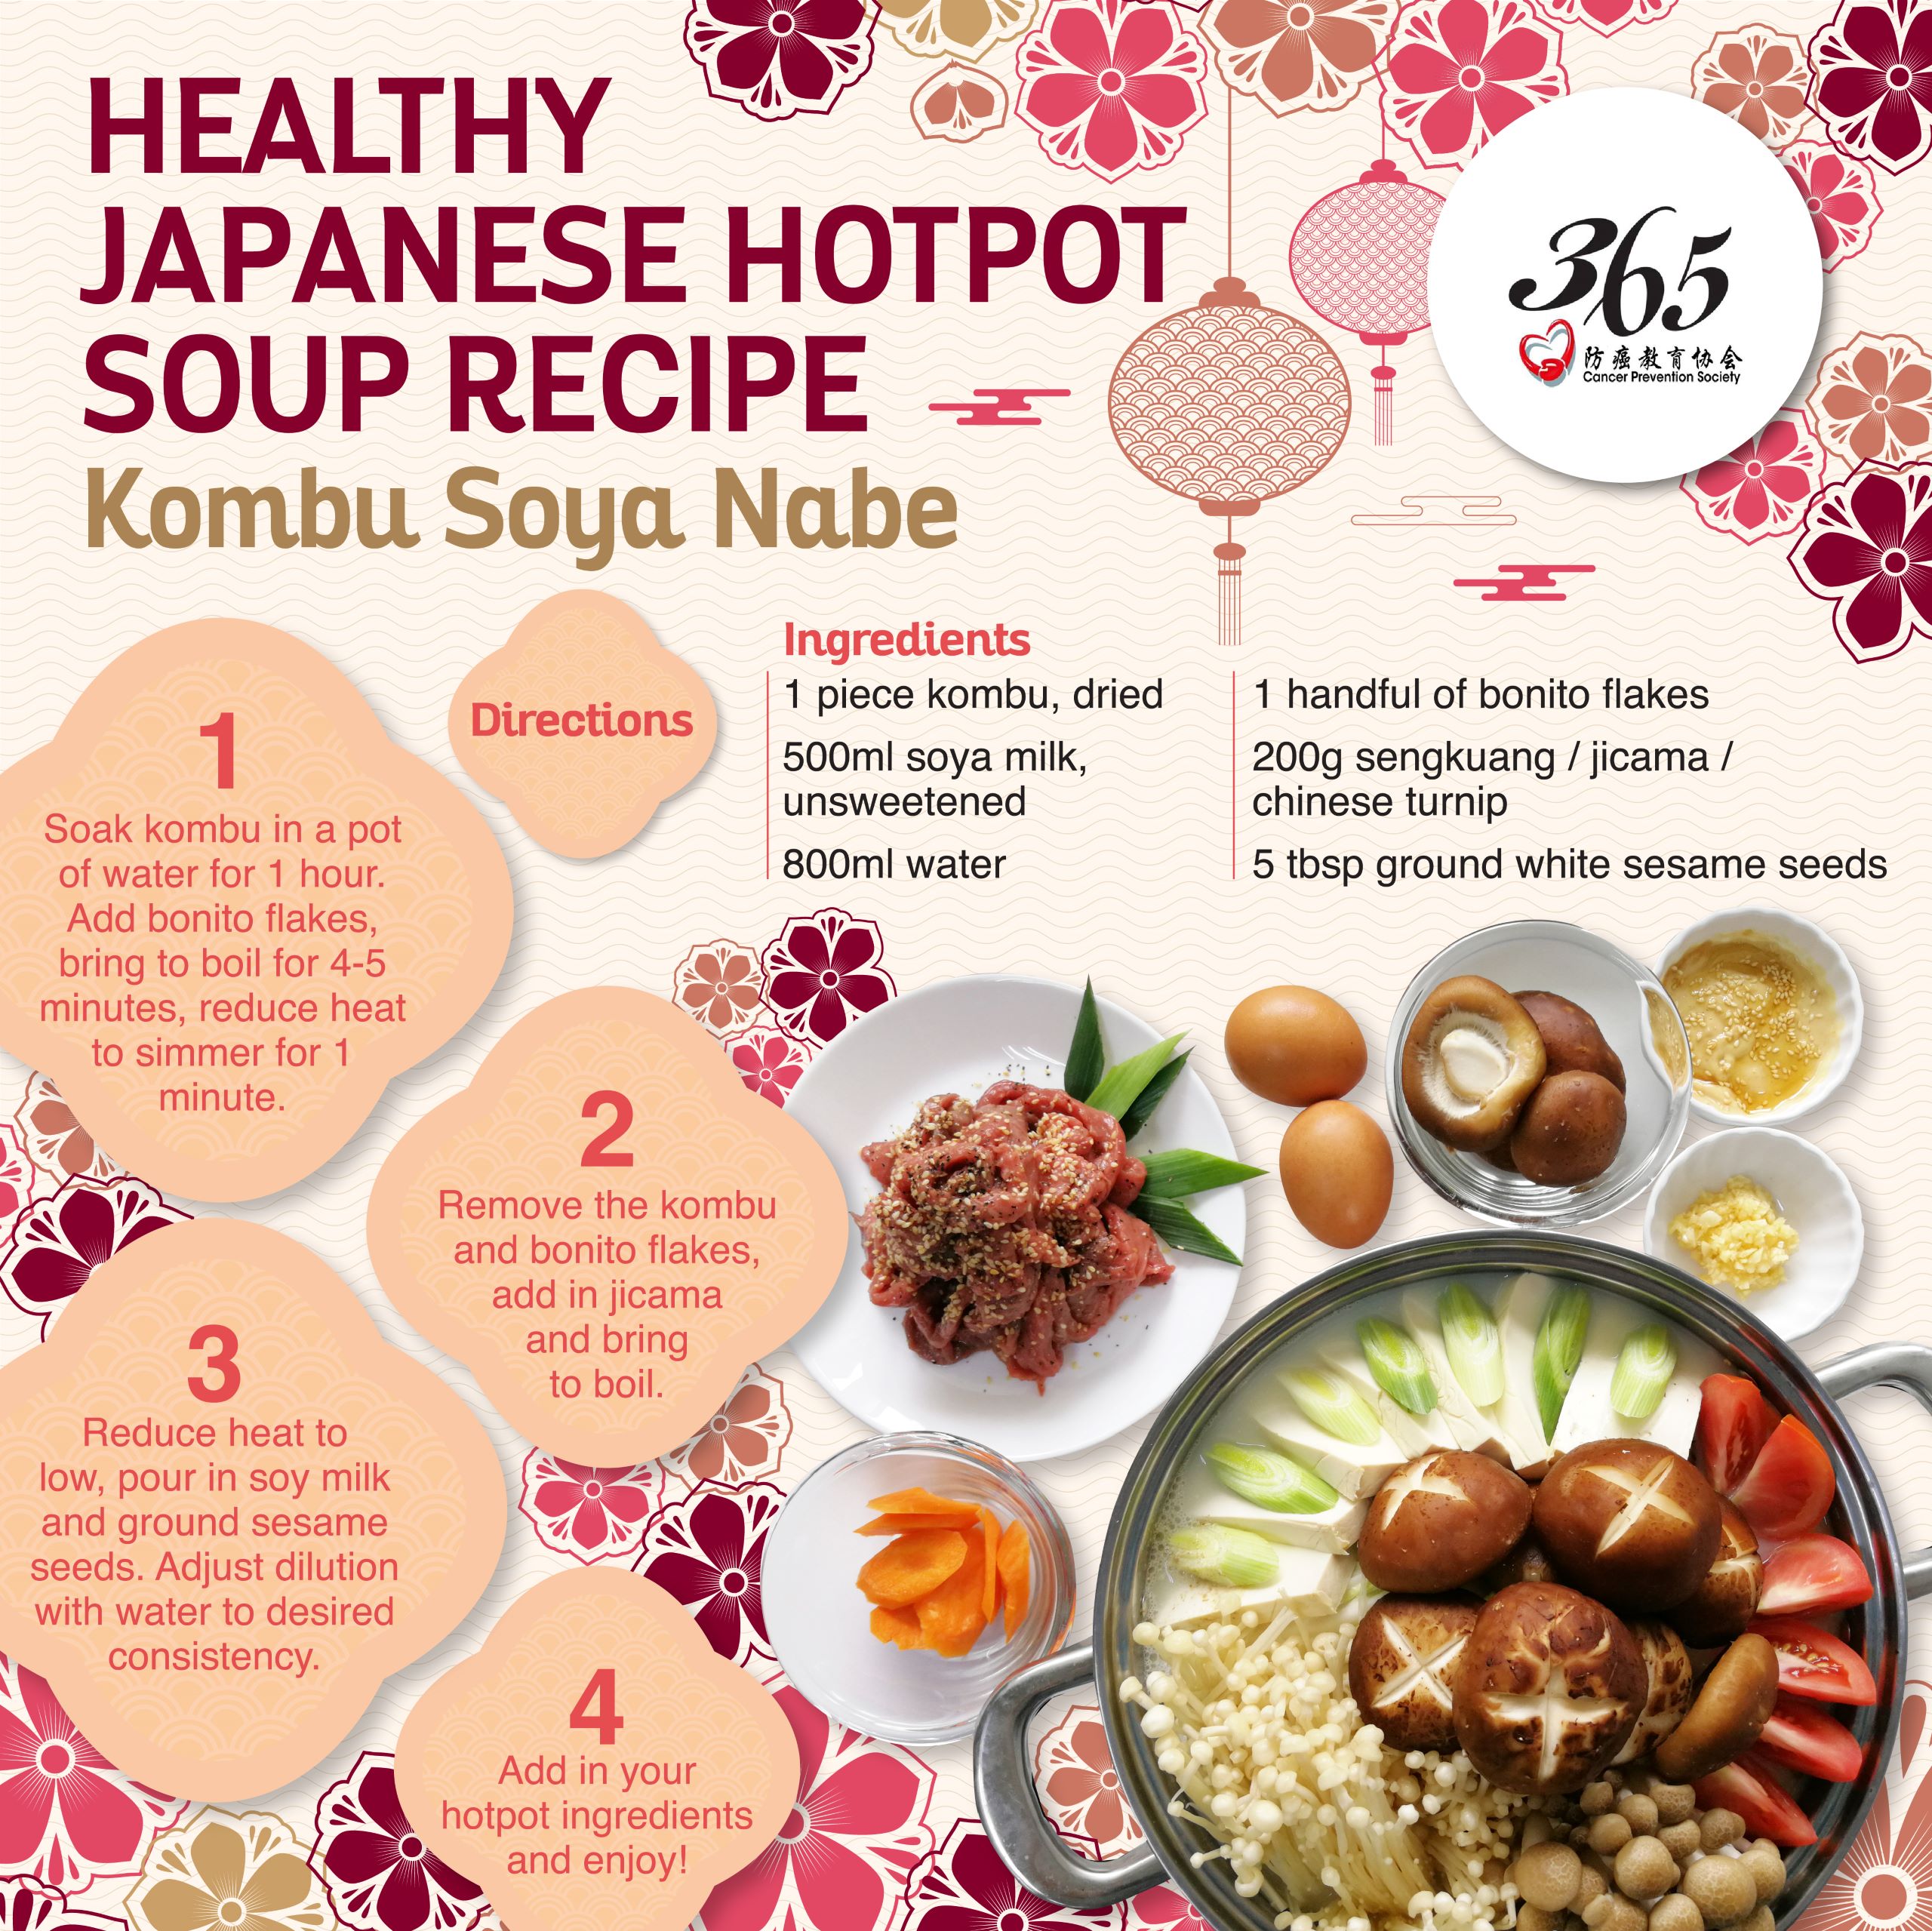 Hot Pot Treats: Japan's Most Popular “Oden” Ingredients